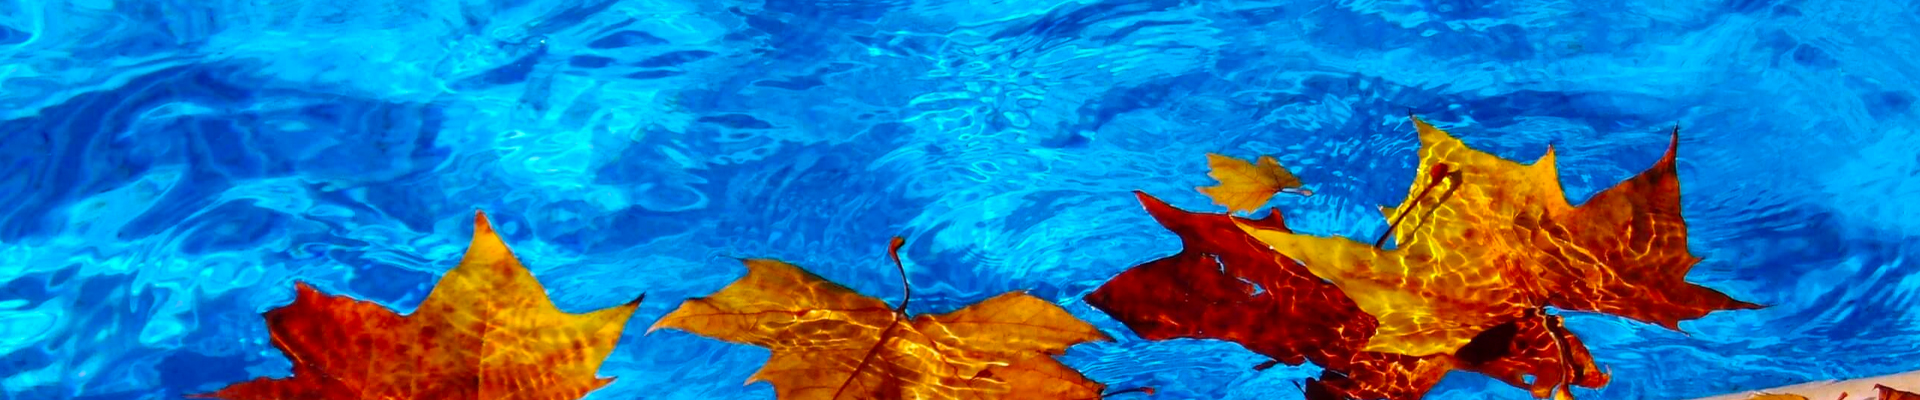 fall leafs in splash pool before winterizing